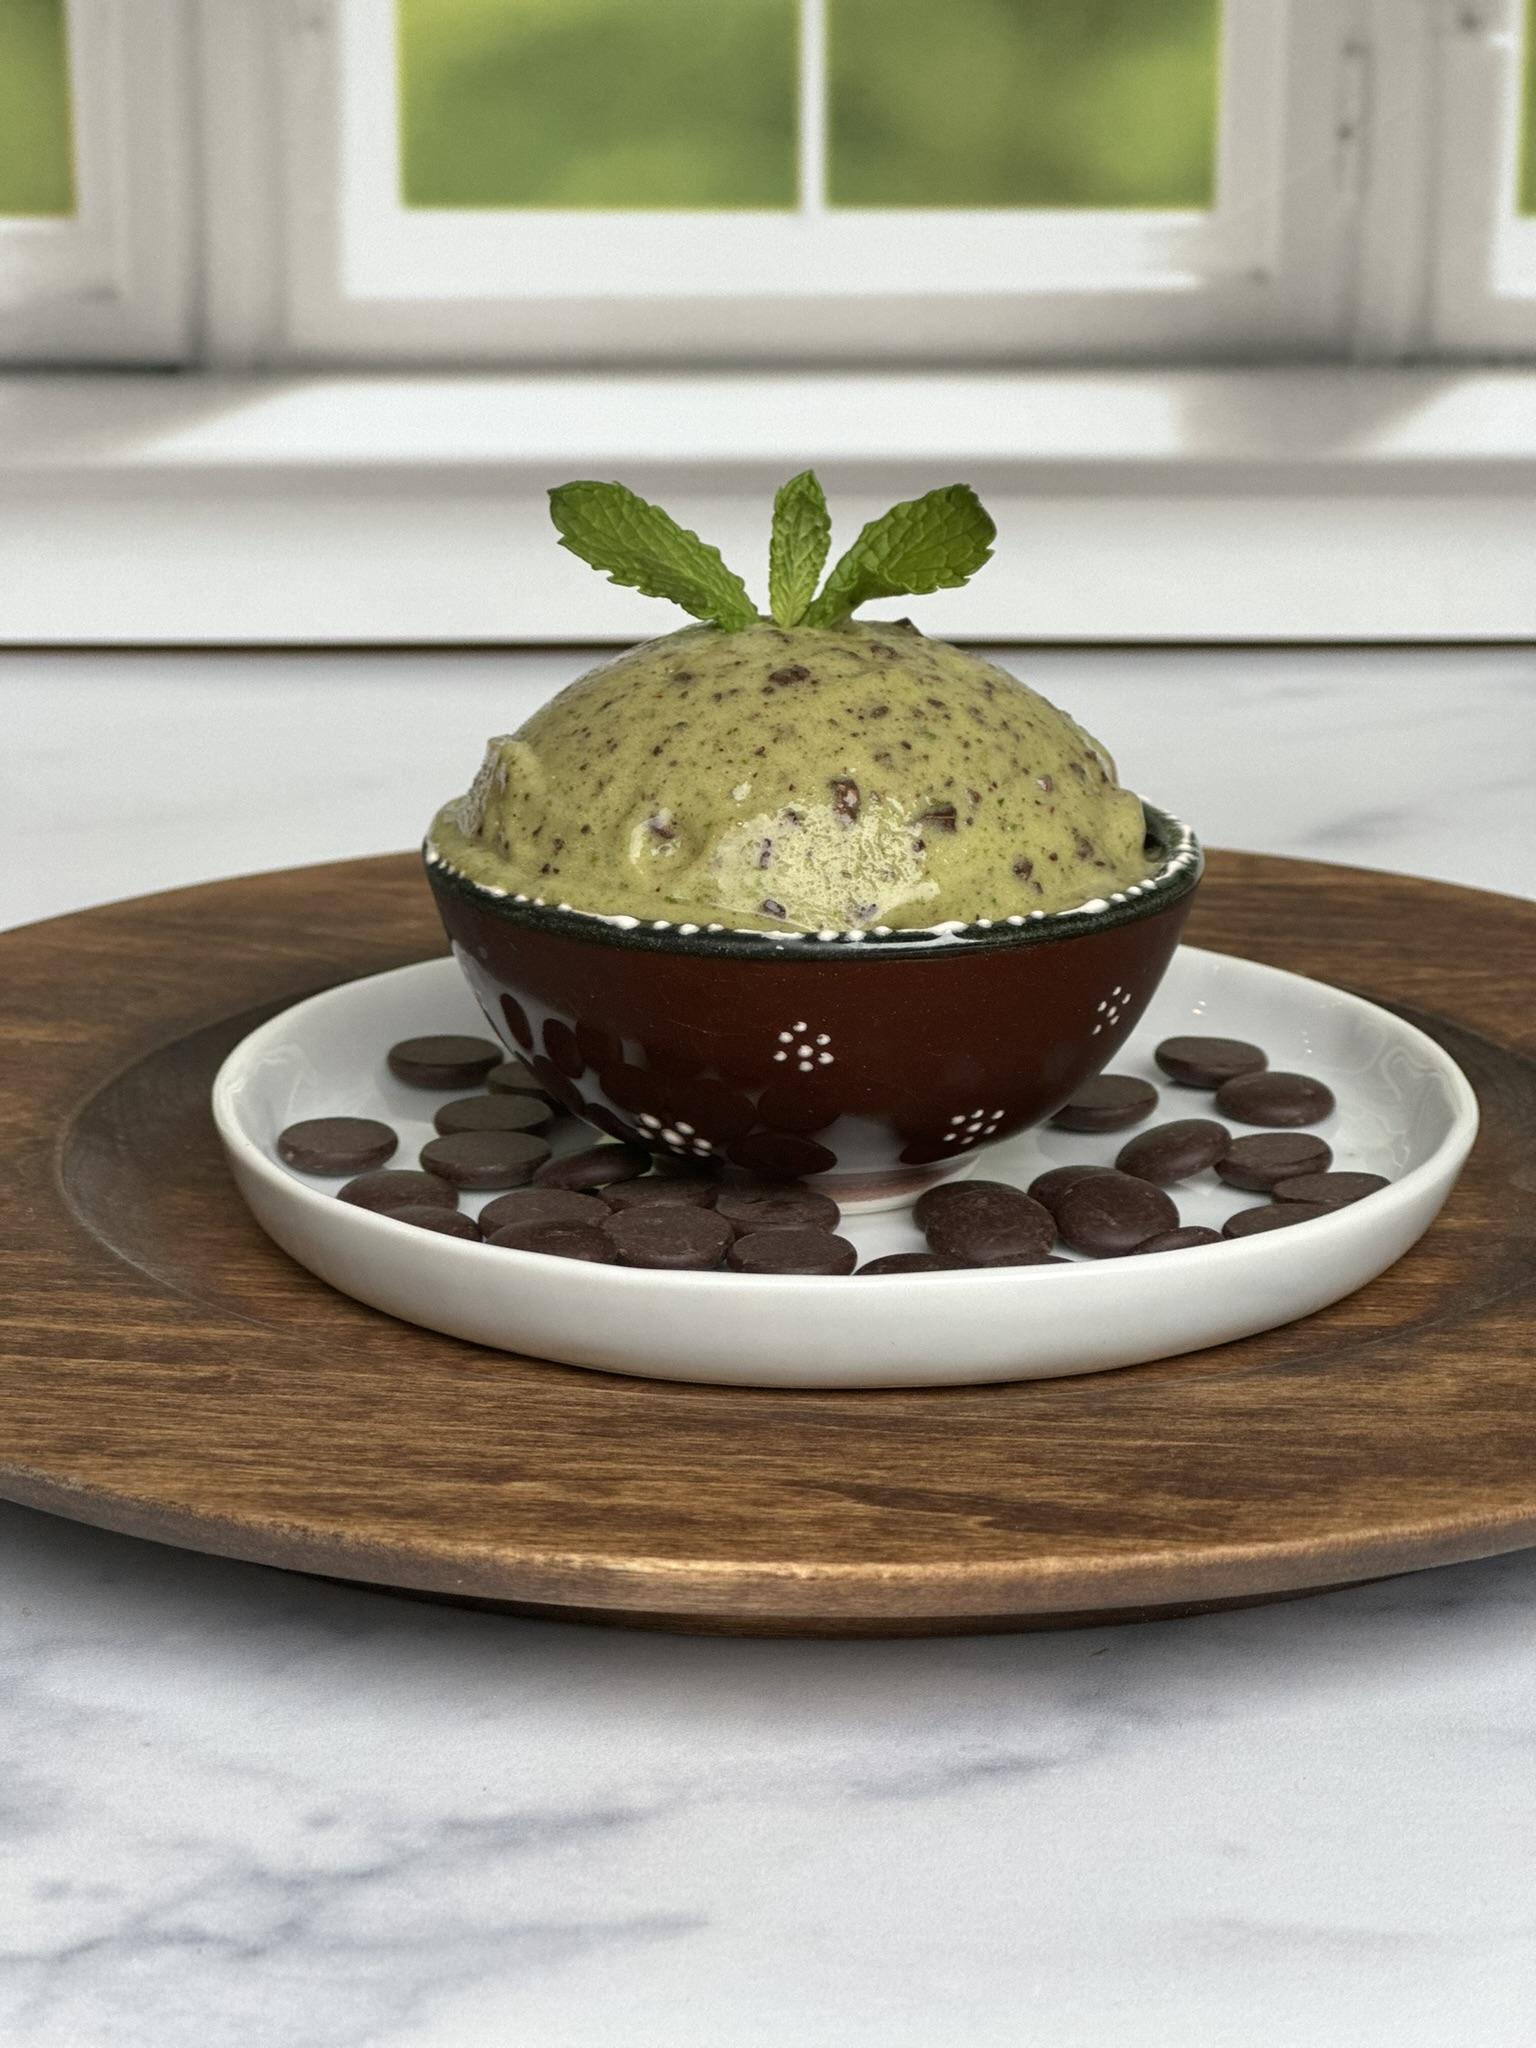 Delicious Ninja Creami Mint Chocolate Chip Ice Cream - Margin Making Mom®